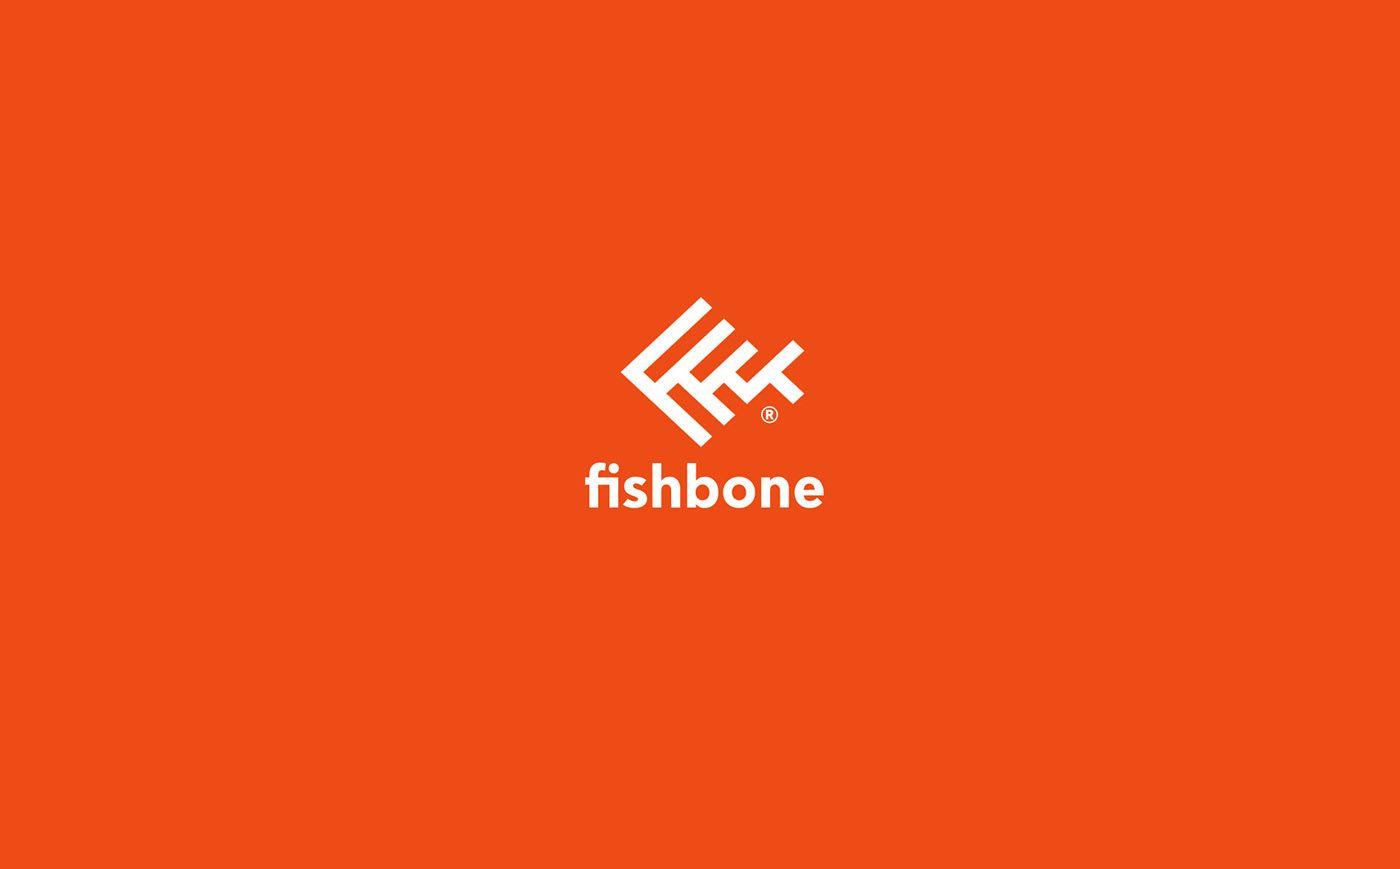 Fishbone Logo - Fishbone Logo & Identity Design on Behance